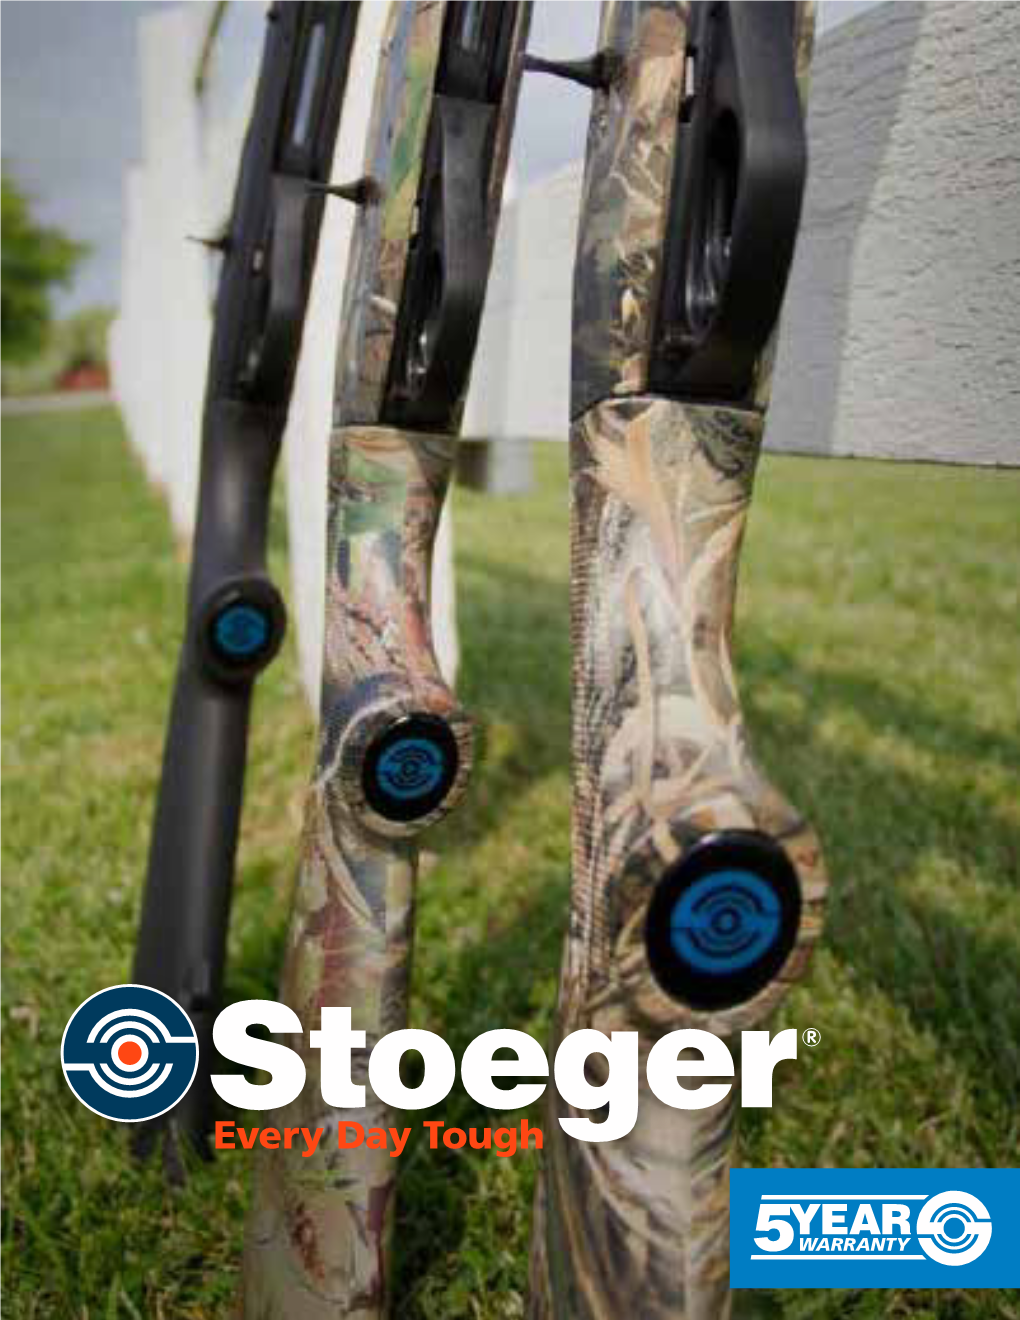 Stoeger-1 SEMI-AUTOMATIC SHOTGUNS Stoeger Dealer Workbook